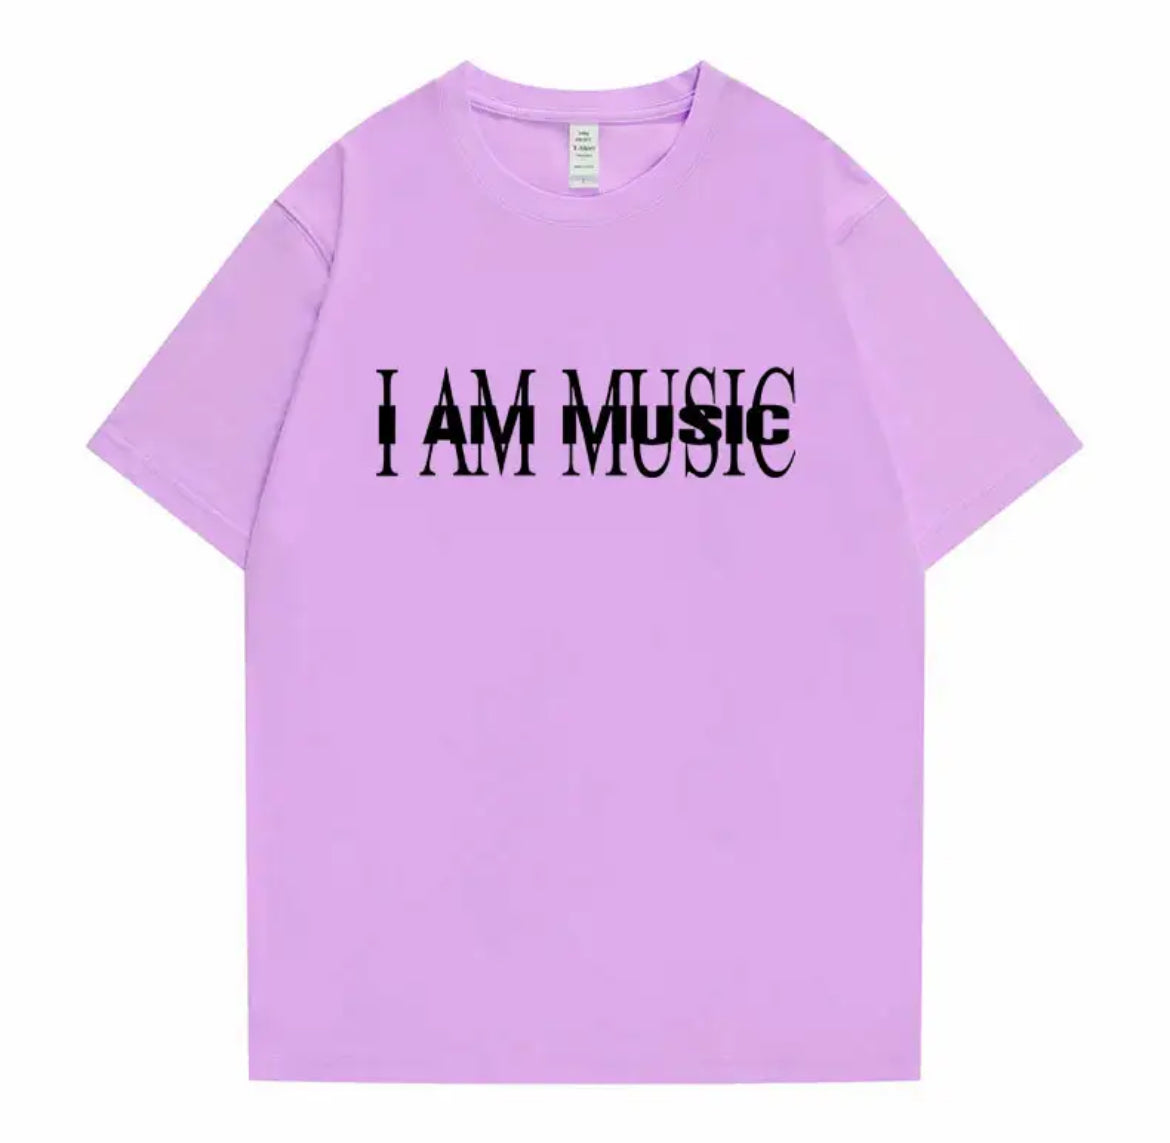 I AM MUSIC Playboi Carti T-shirt